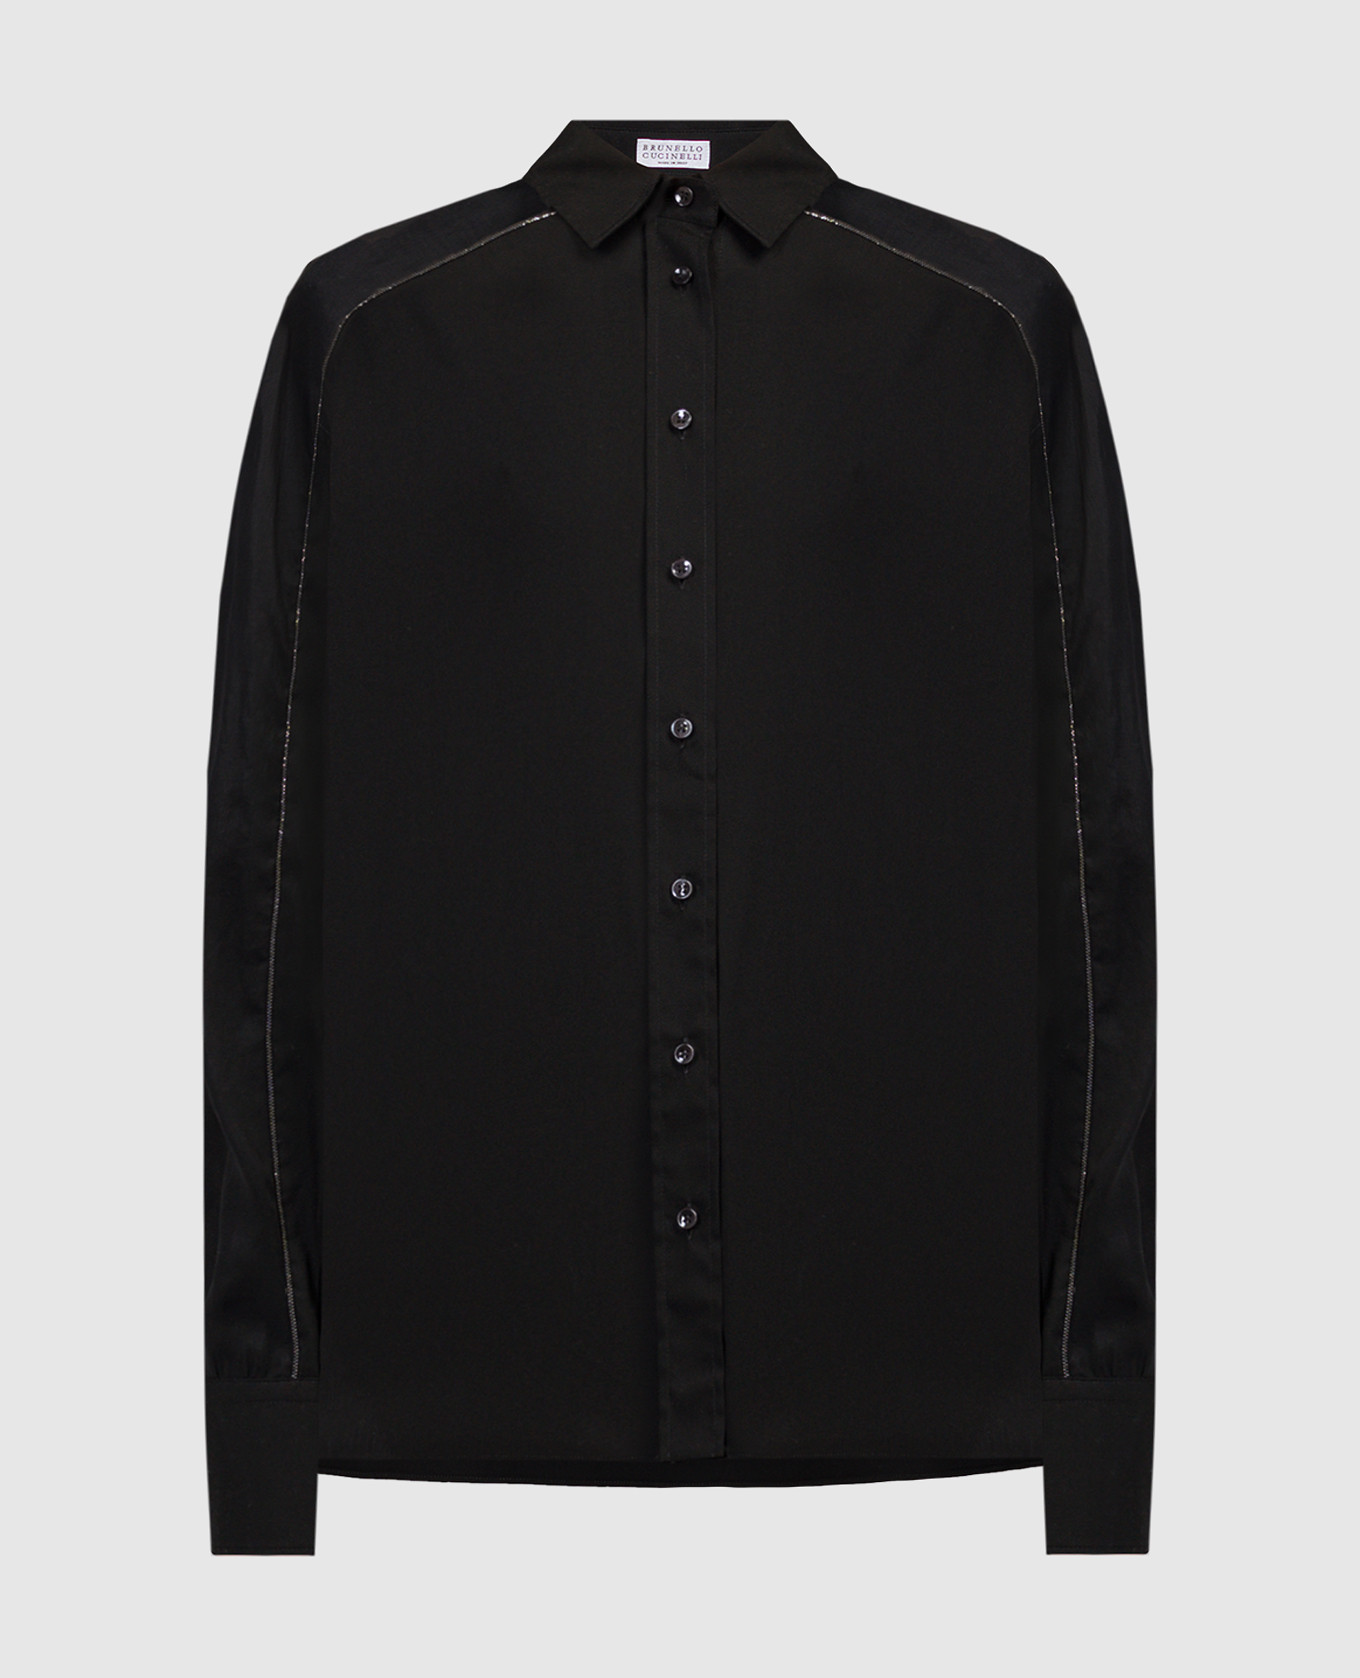 Black blouse with monil chain